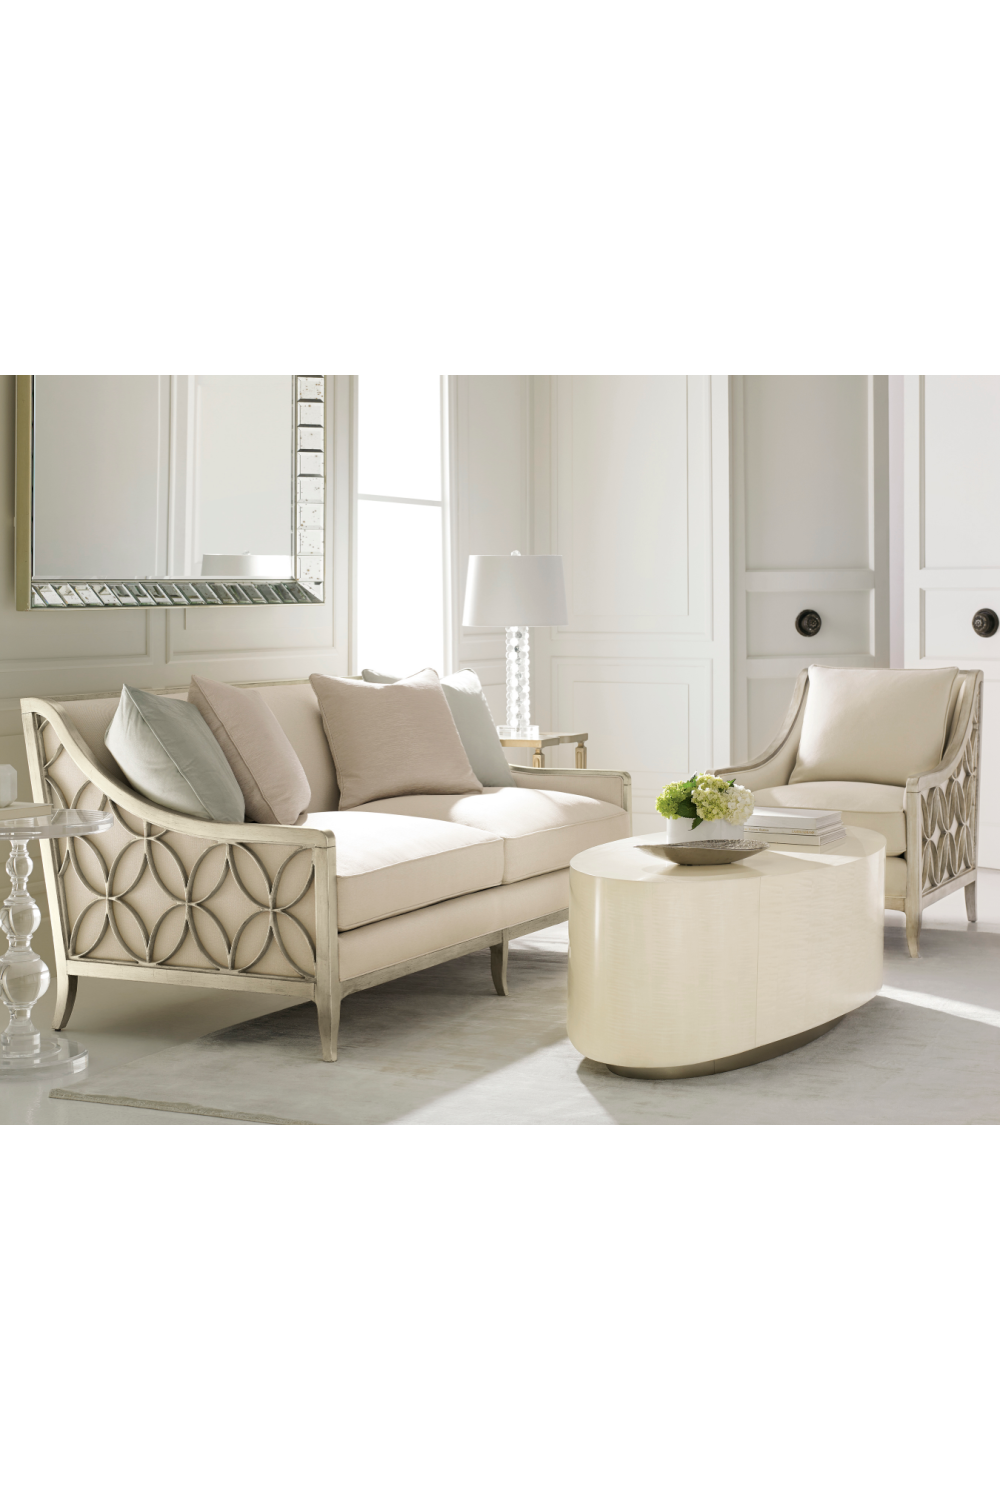 Trellis Lounge Chair | Caracole Social Butterfly | Oroa.com